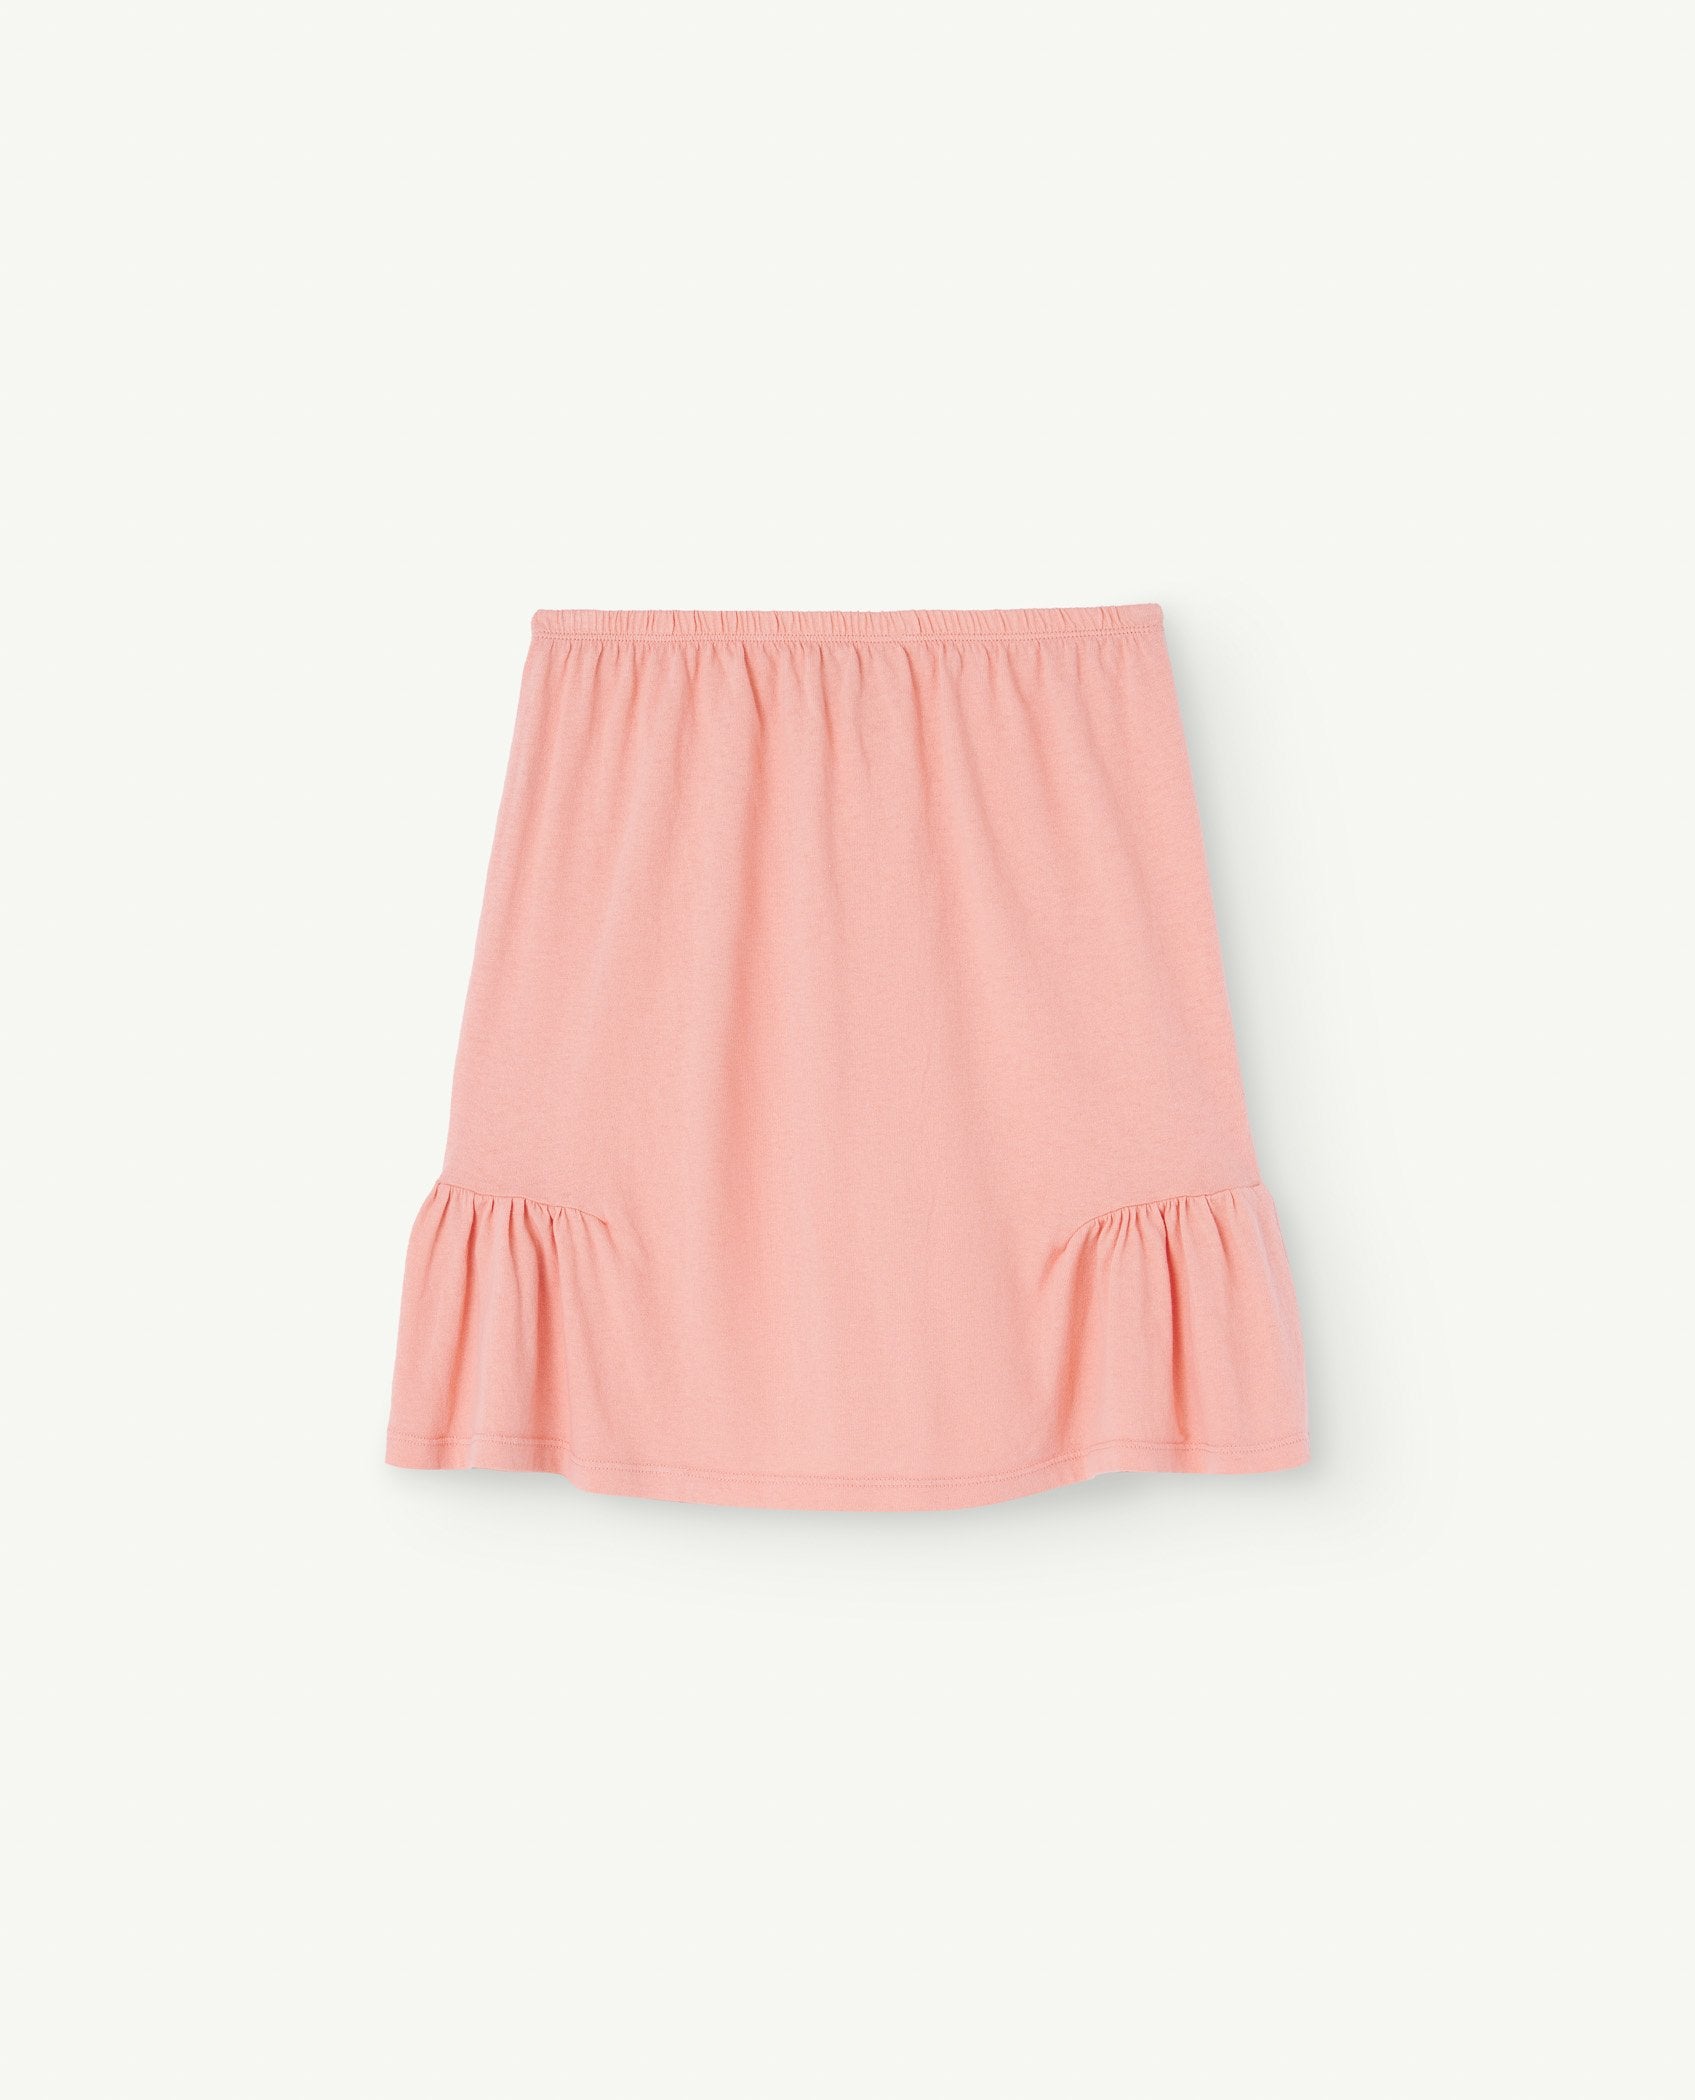 Pink Slug Skirt PRODUCT BACK